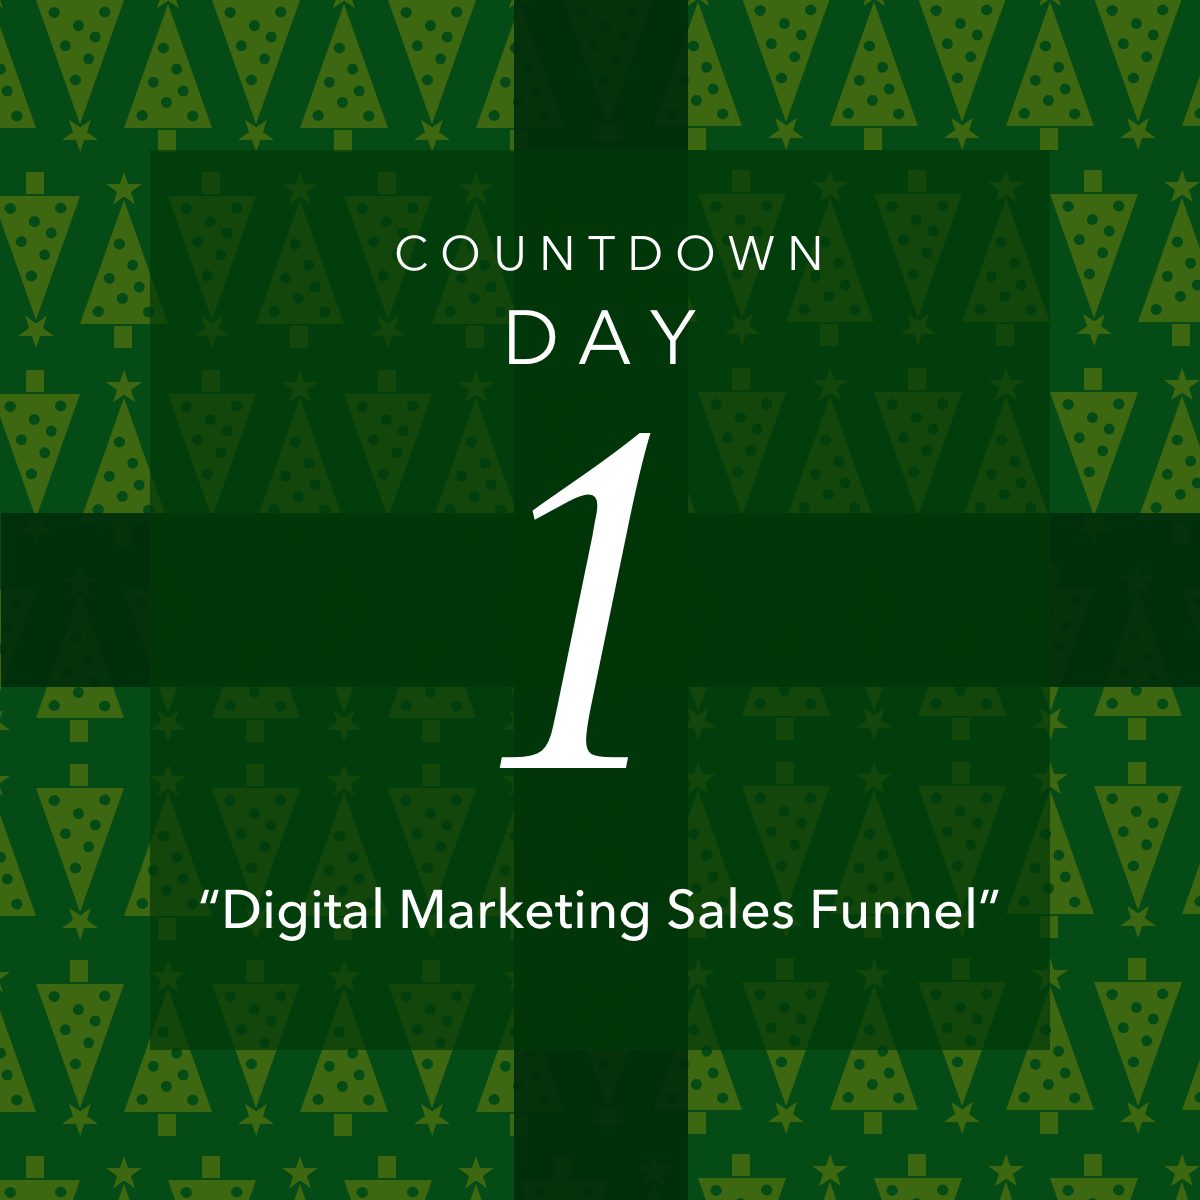 Day 1 Digital Marketing Sales Funnel